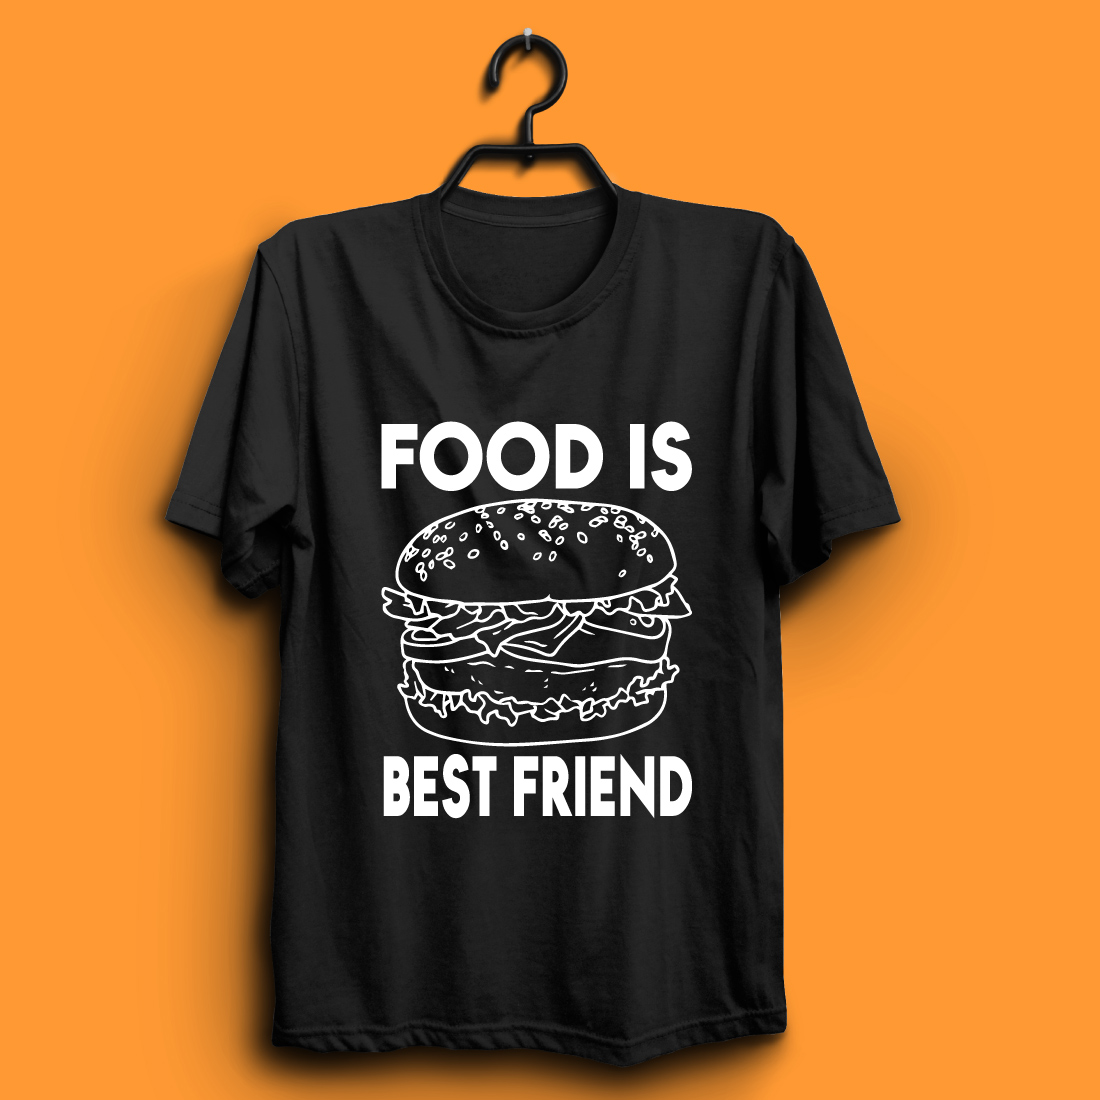 food t shirt design04 934